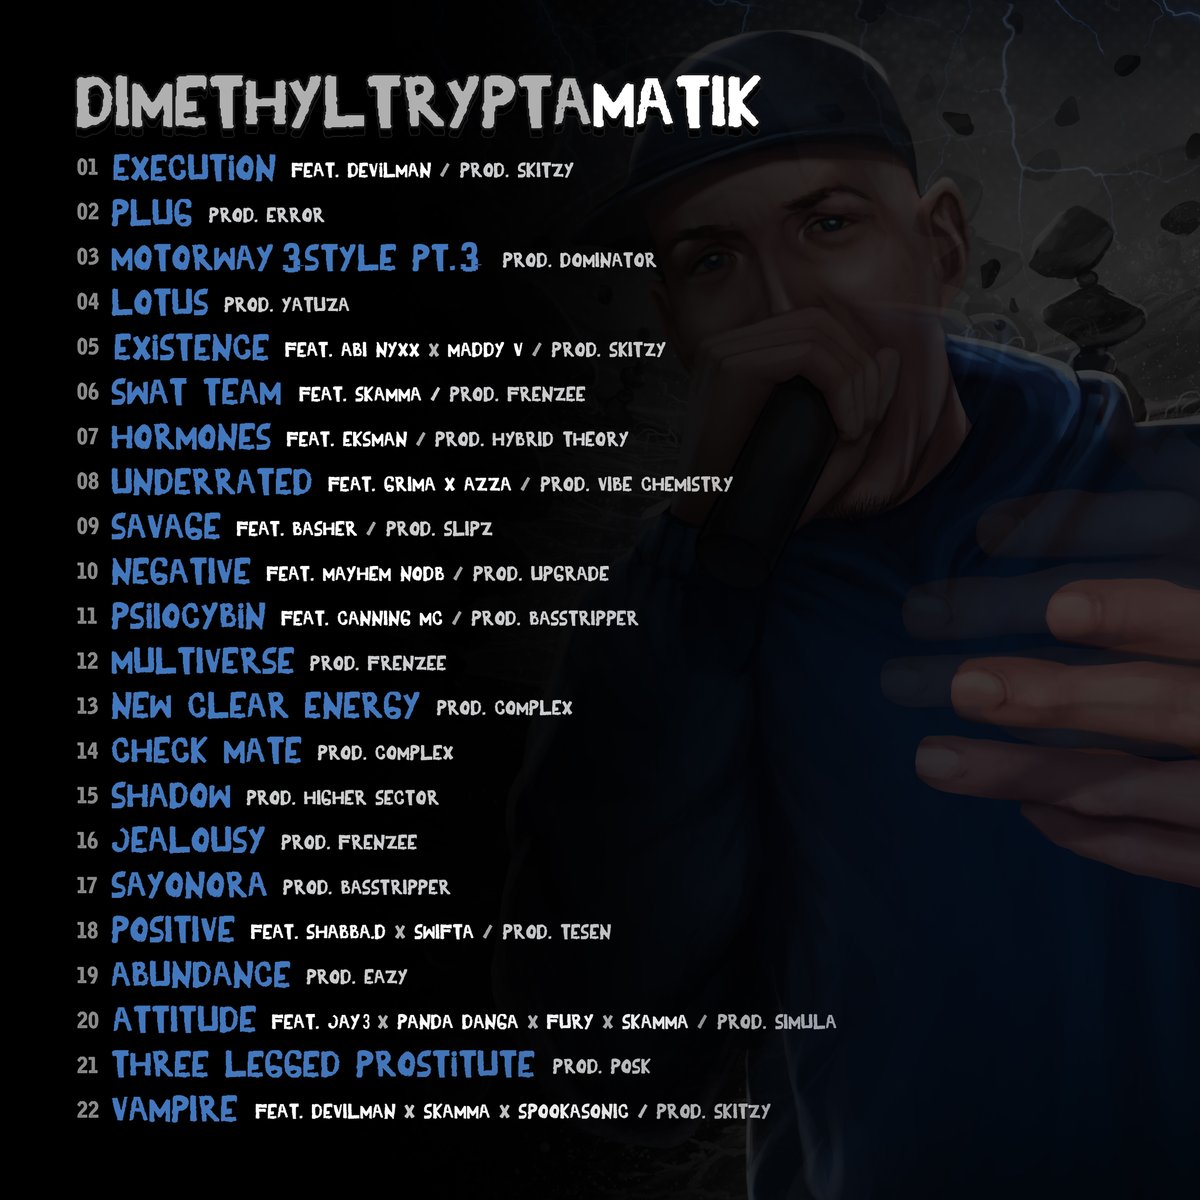 Image of Dimethyltryptamatik - Physical CD